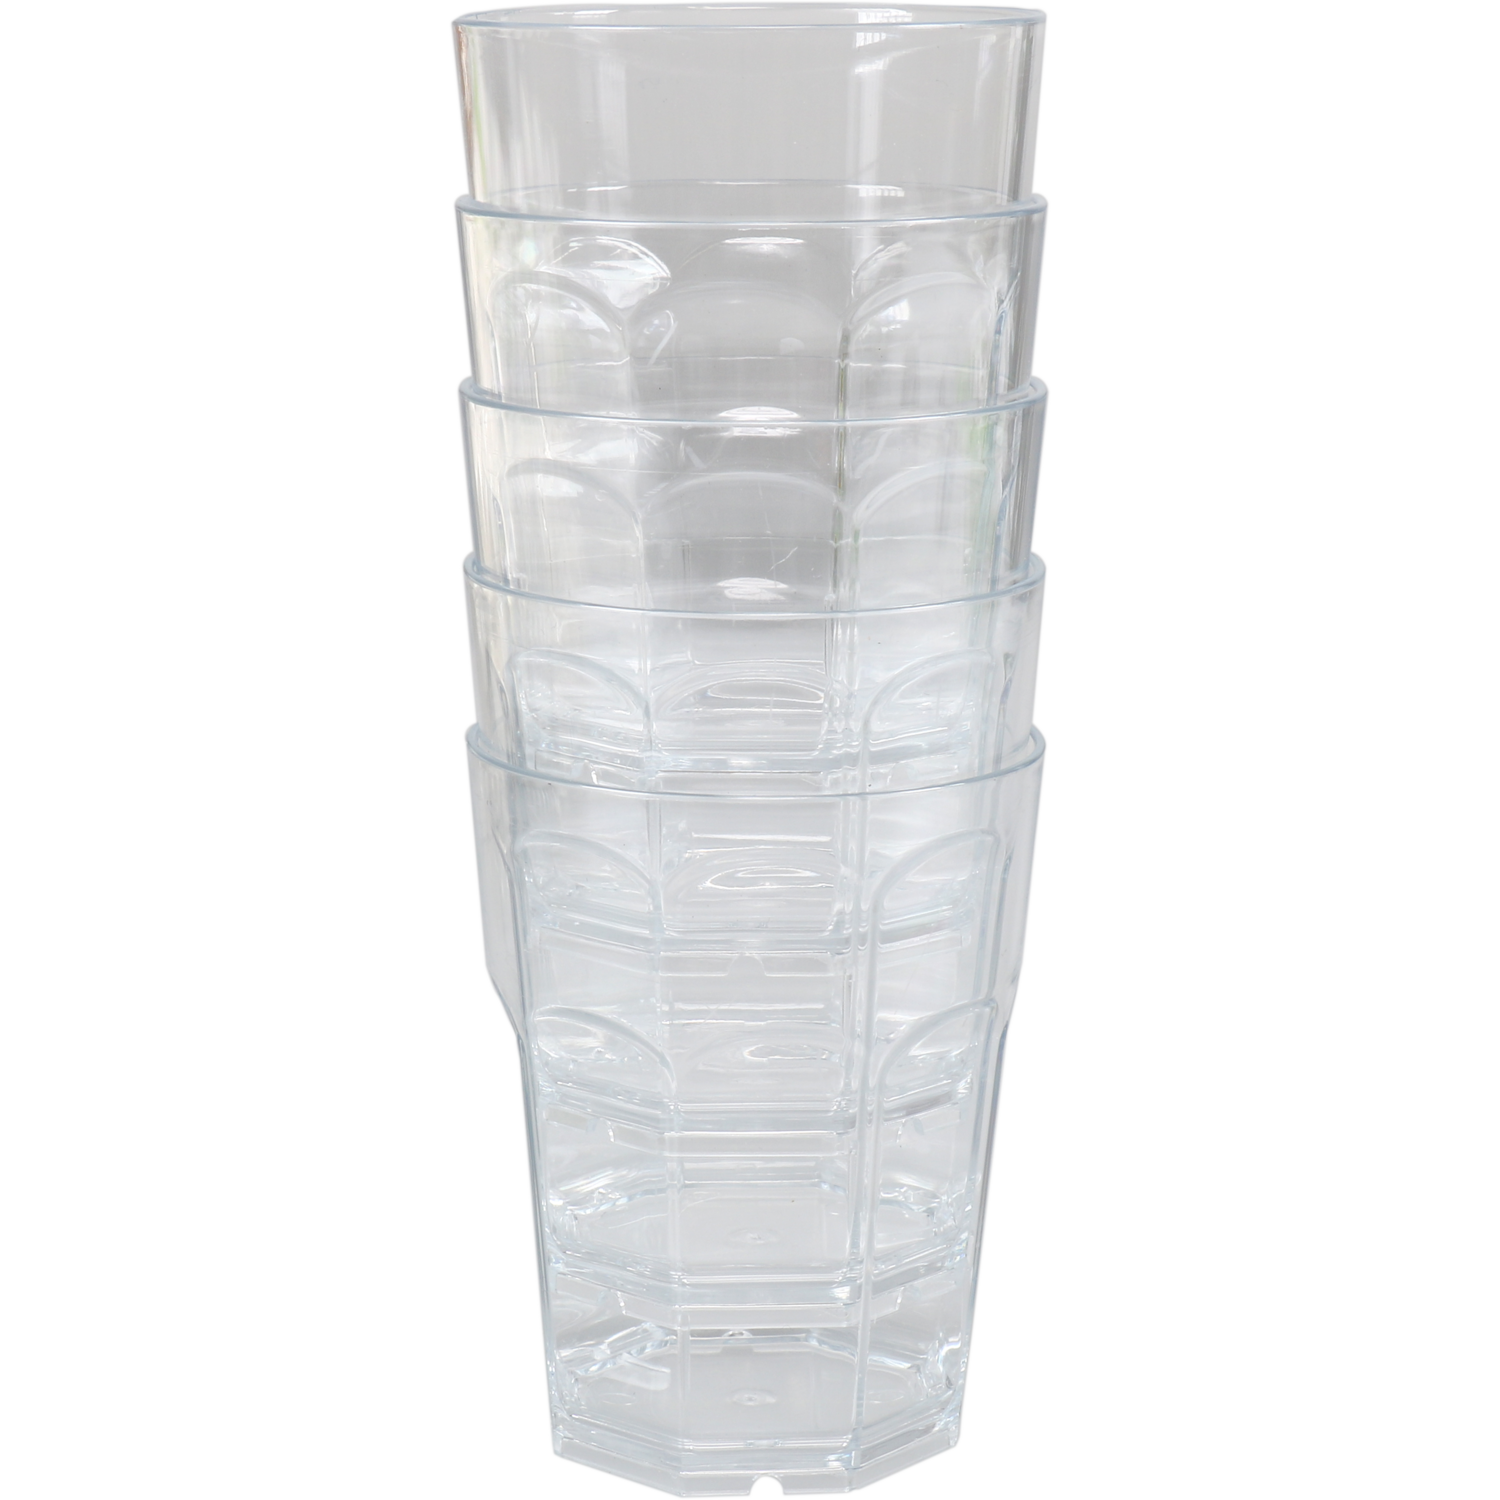 Glas, brasserieglas, pETG, 220ml, transparant 2